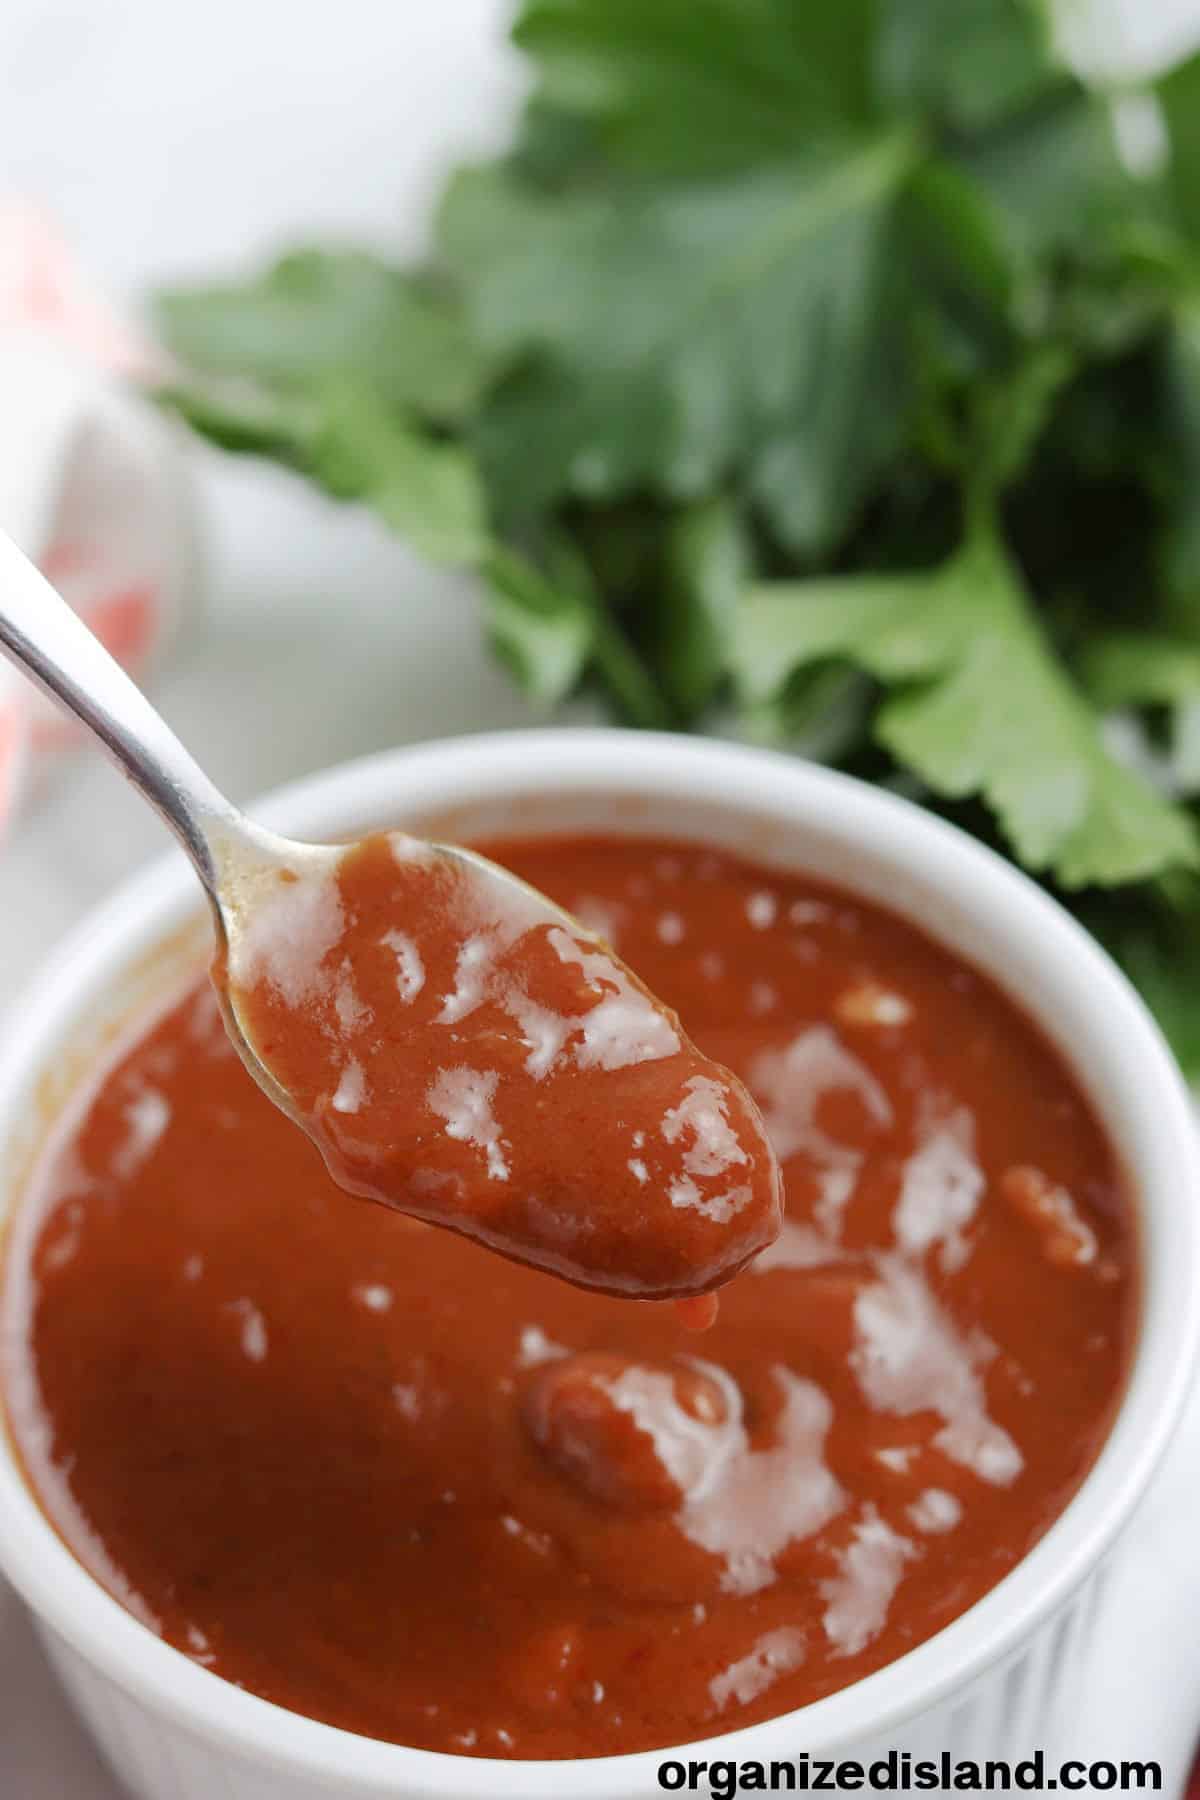 Homemade Hoisin sauce in bowl with sooon.